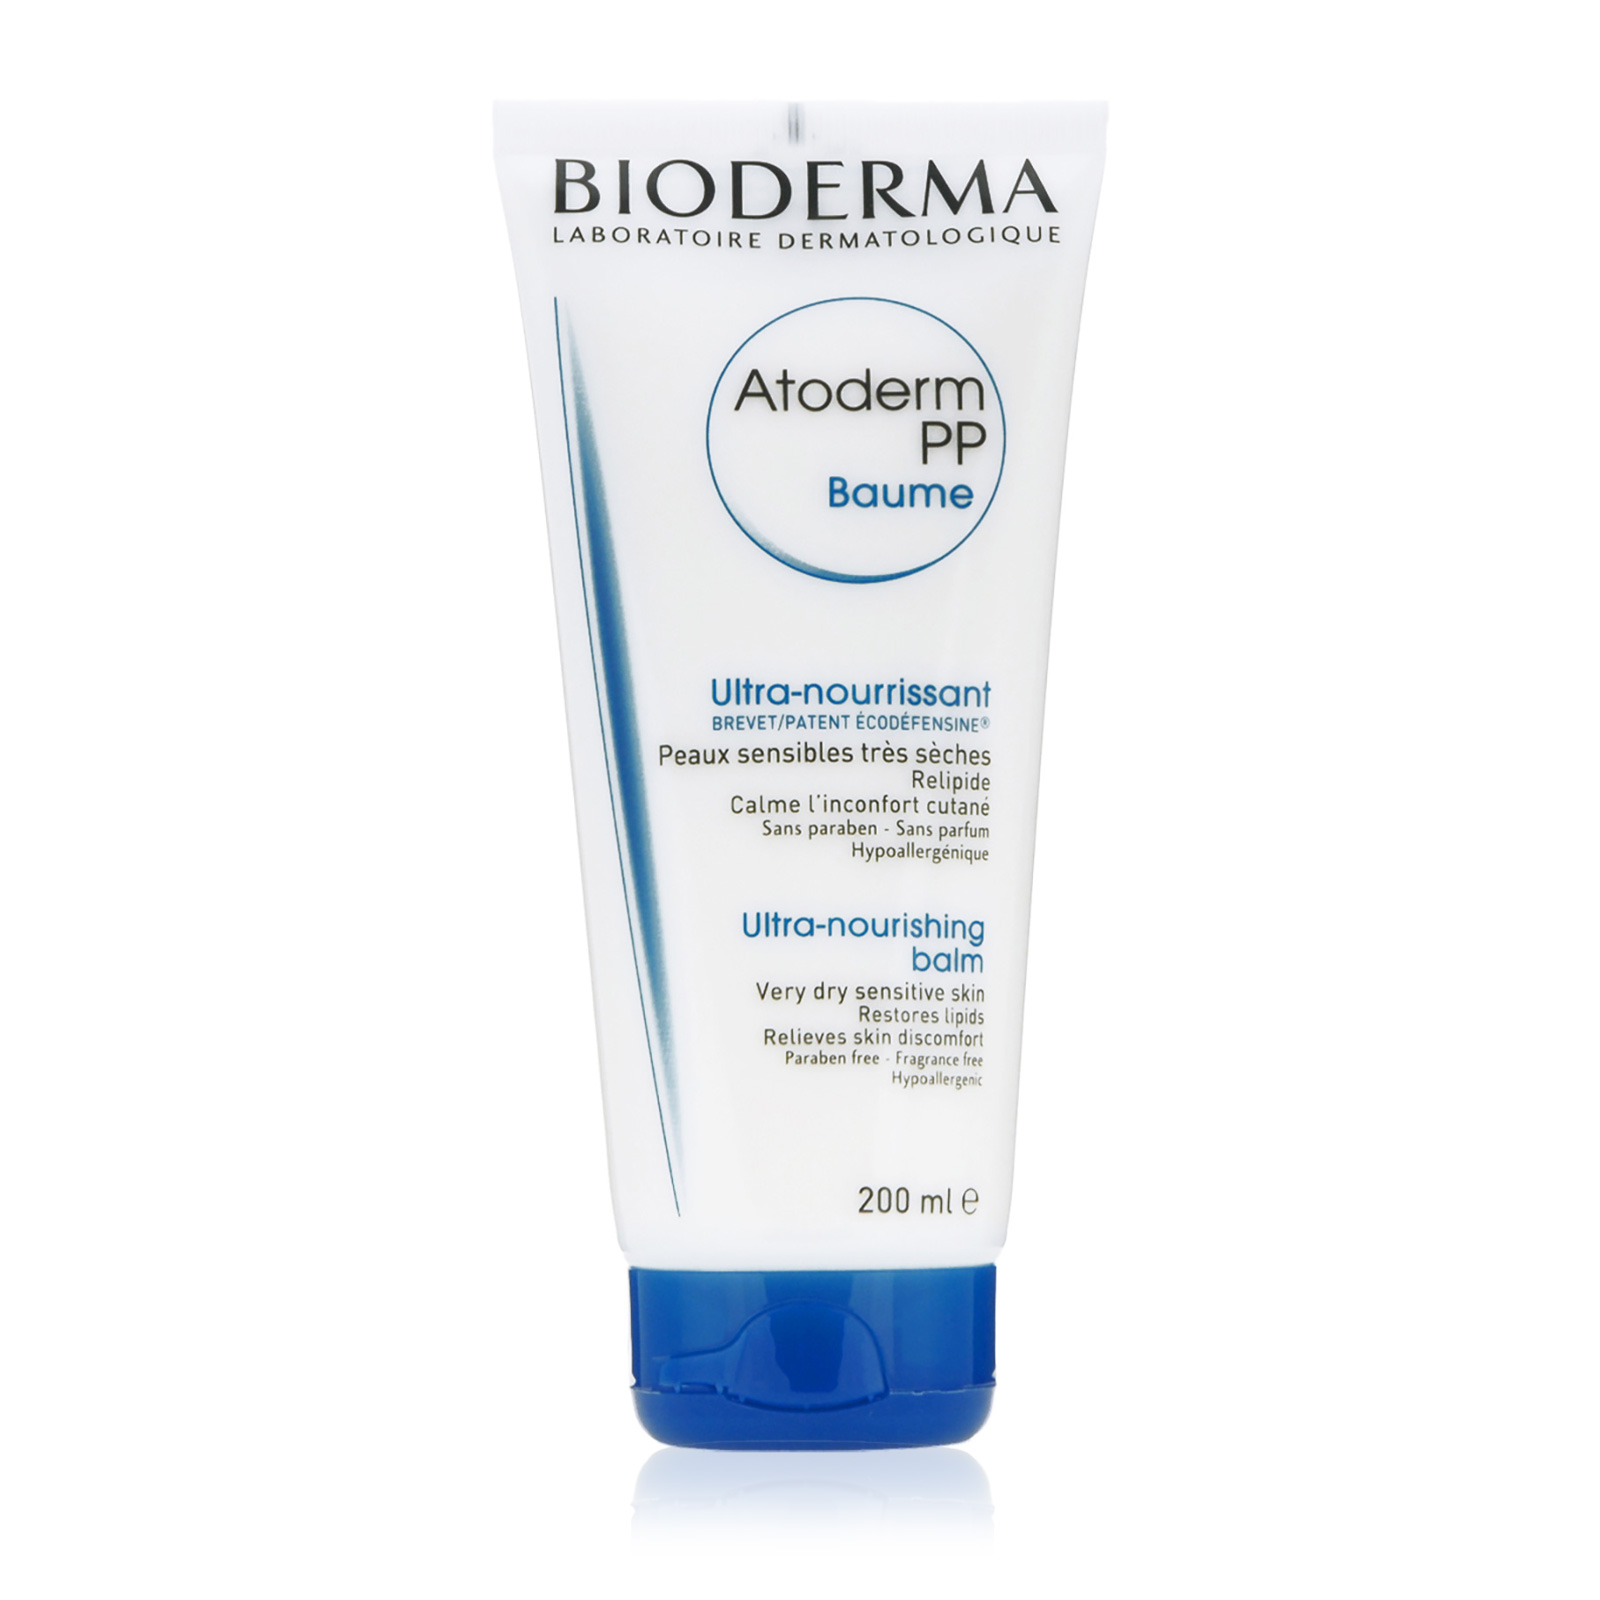 AtodermPP Ultra-Nourishing Balm (For Very Dry Sensitive Skin)